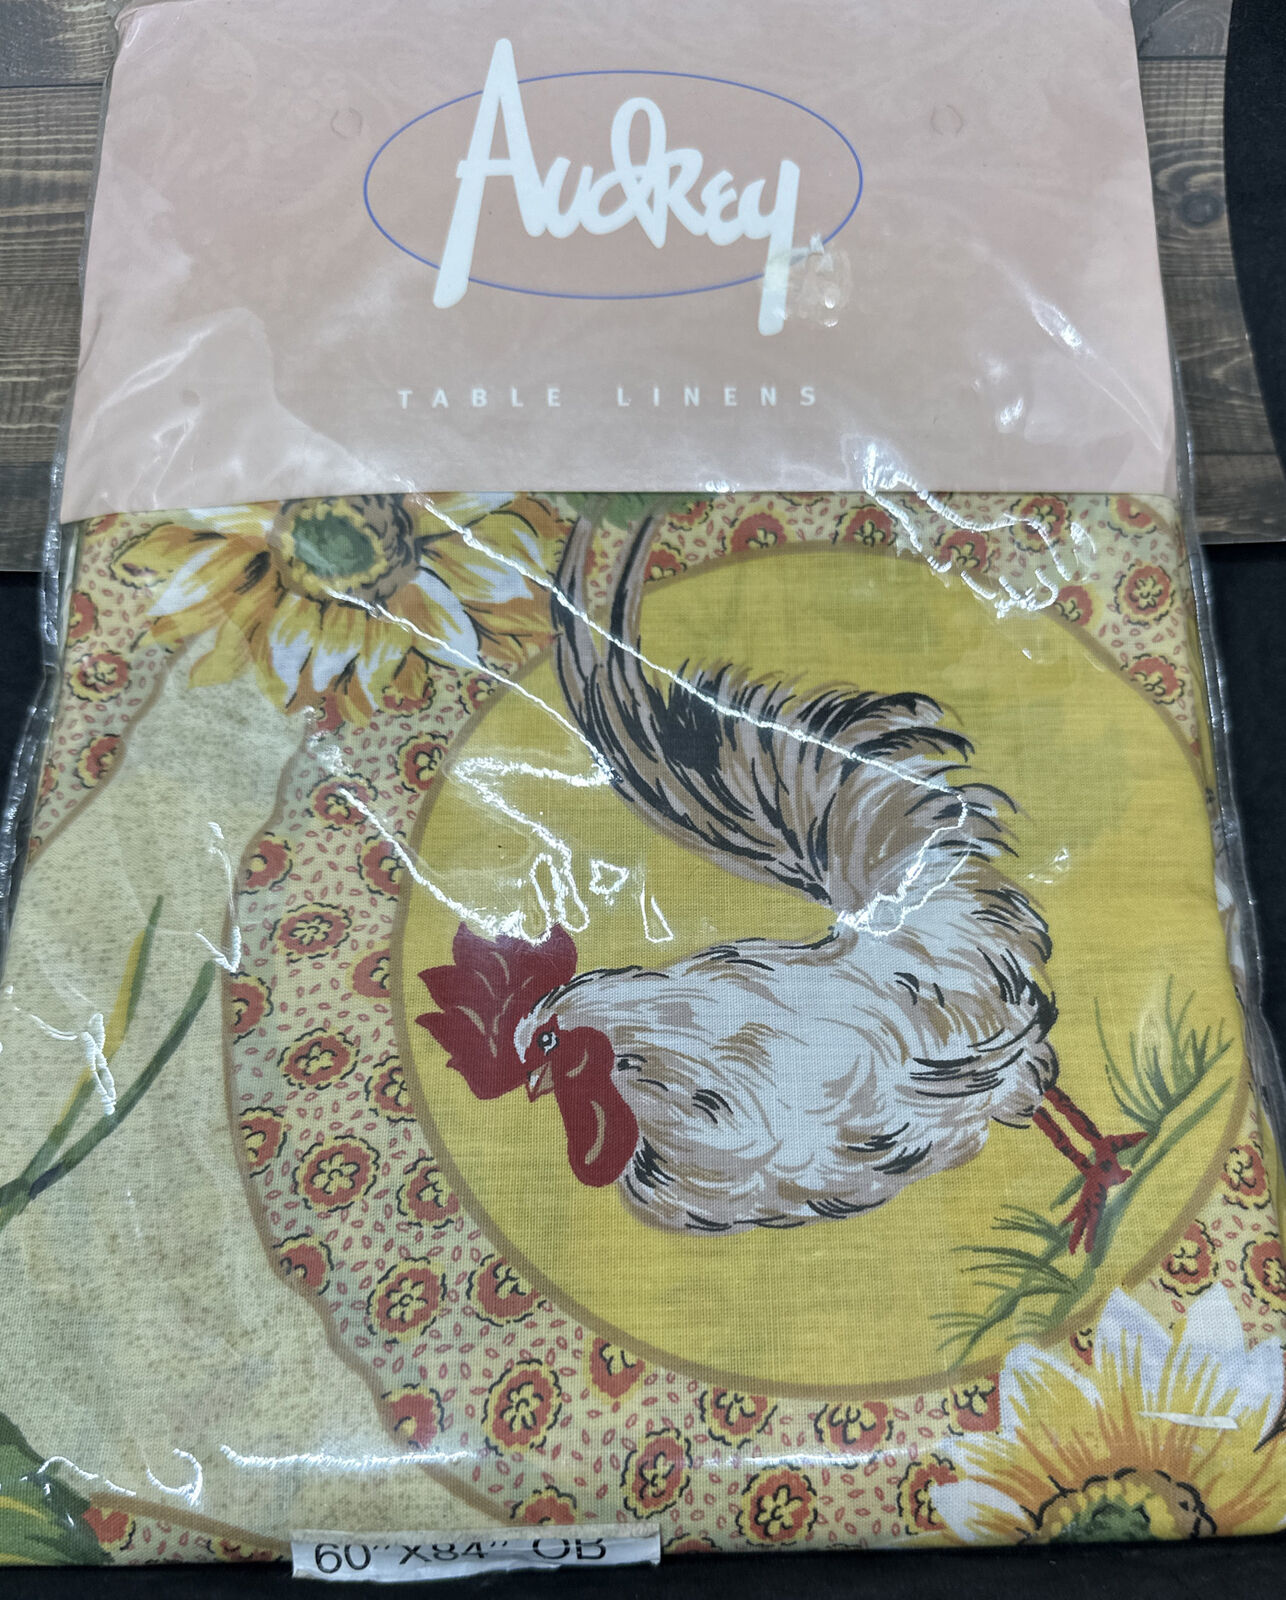 Vtg Audrey Table Linens Cloth 60”x84” Rooster Plate Design Retro Mod Sunflowers